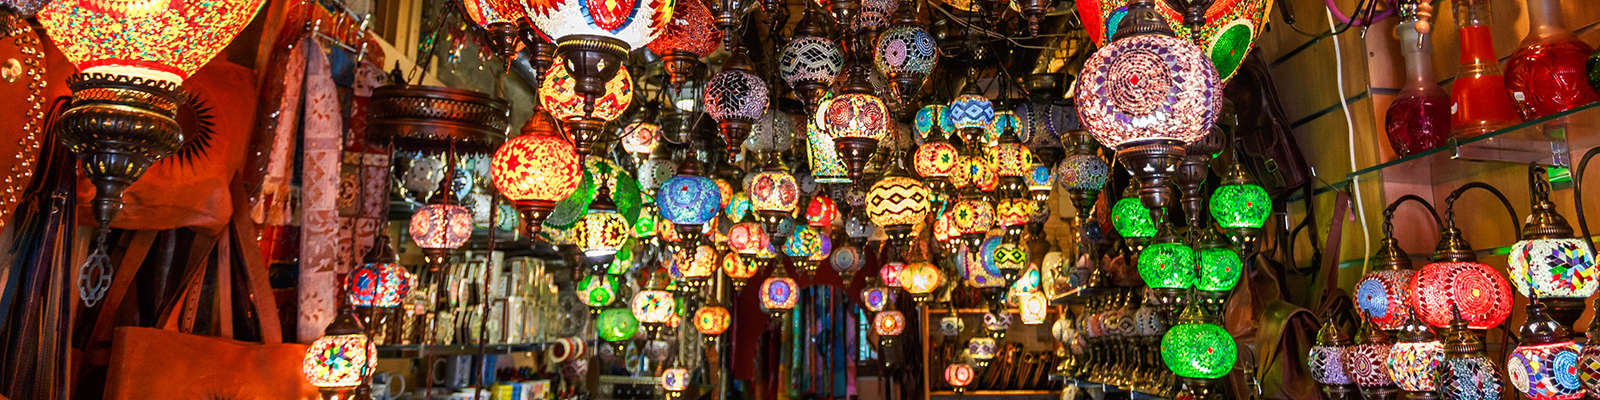 Explore the El-Alavi bazaar